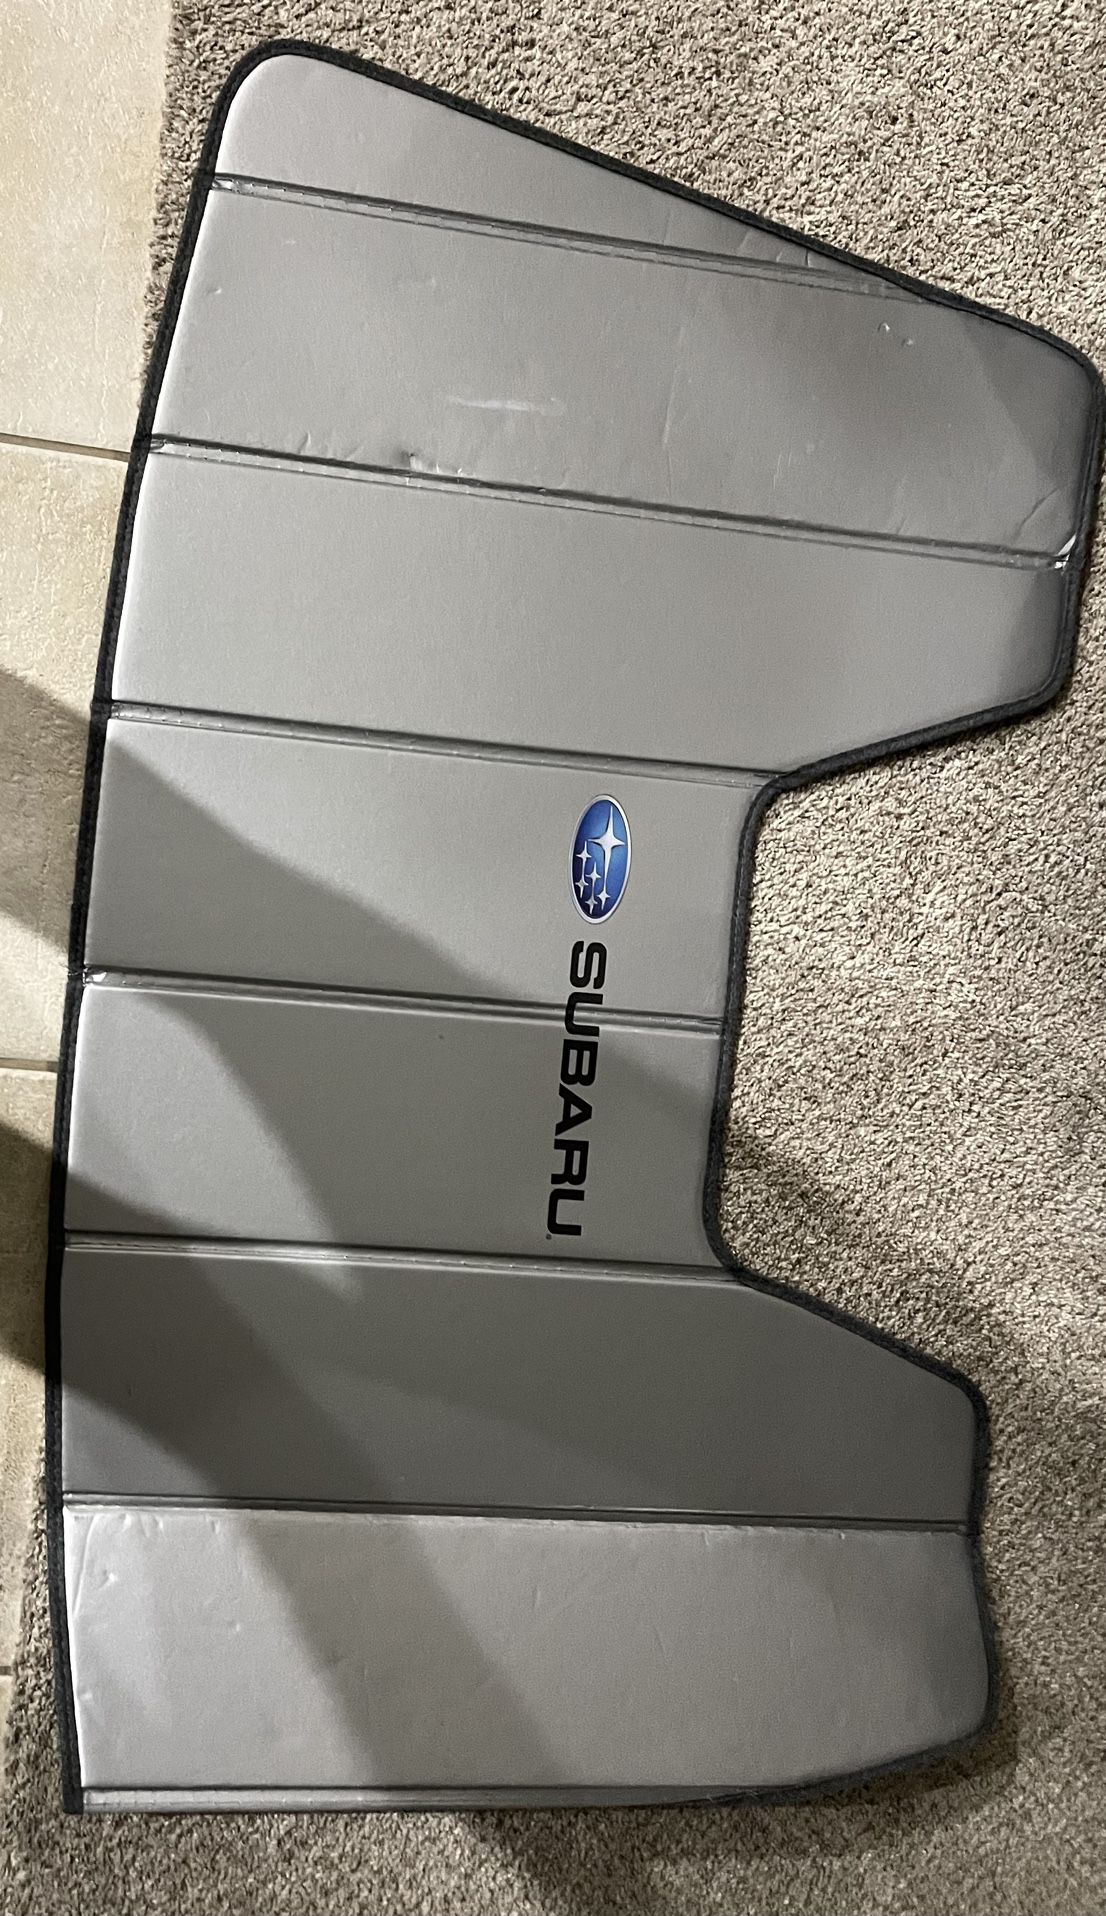 Subaru Windshield Visor 